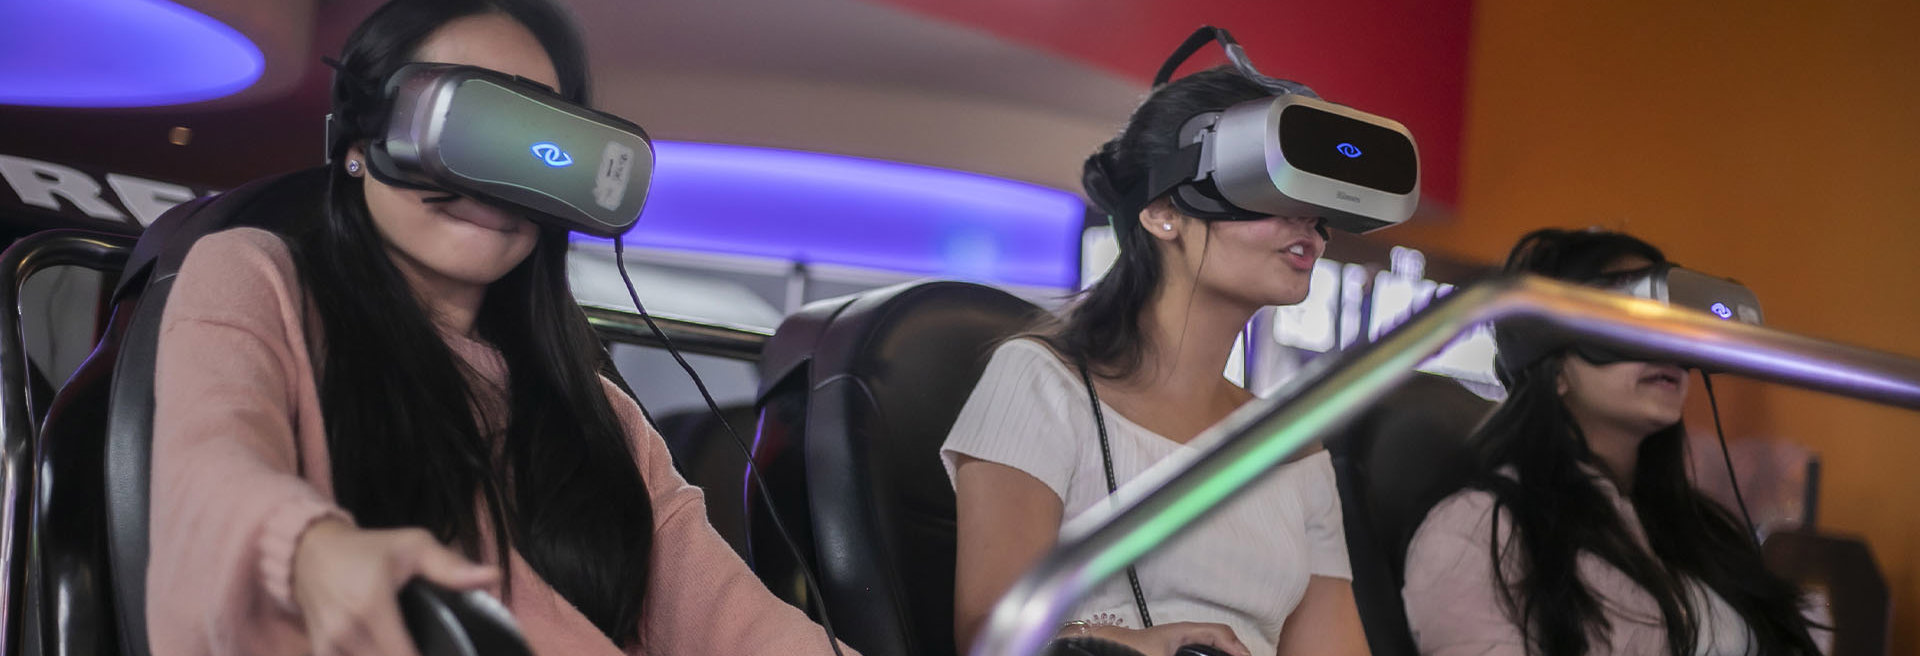 Three girls wearing virtual reality headsets